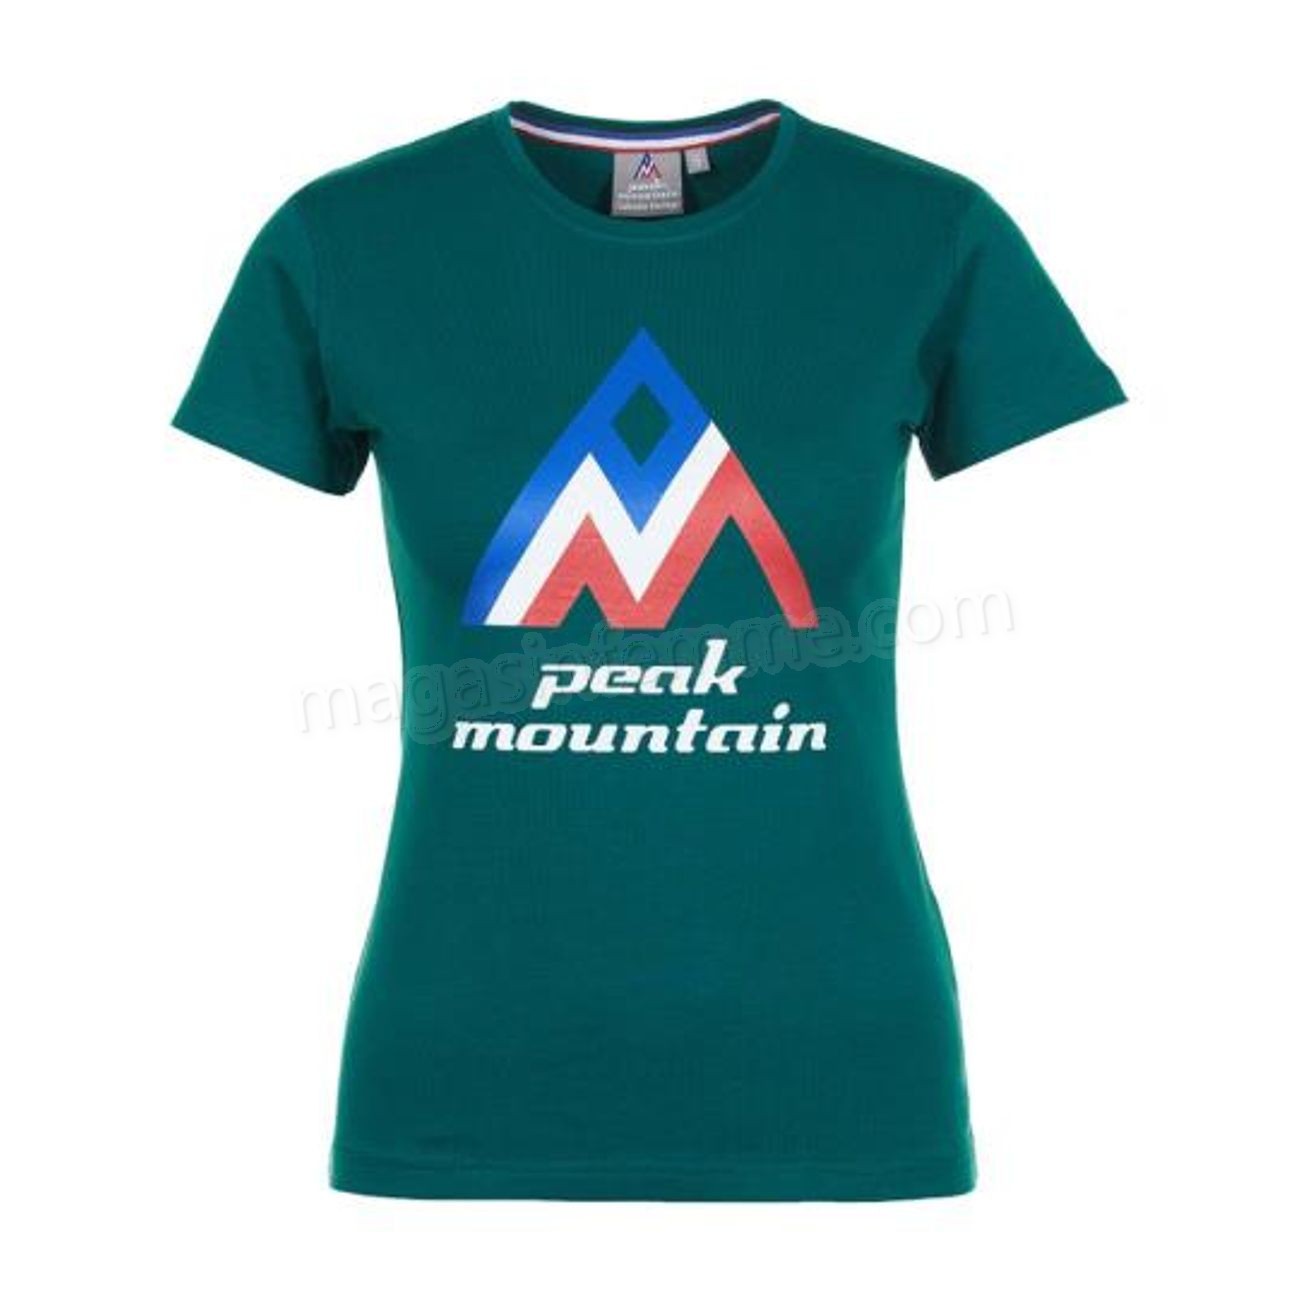 Peak Mountain-Mode- Lifestyle femme PEAK MOUNTAIN ACIMES-vert-L en solde - Peak Mountain-Mode- Lifestyle femme PEAK MOUNTAIN ACIMES-vert-L en solde